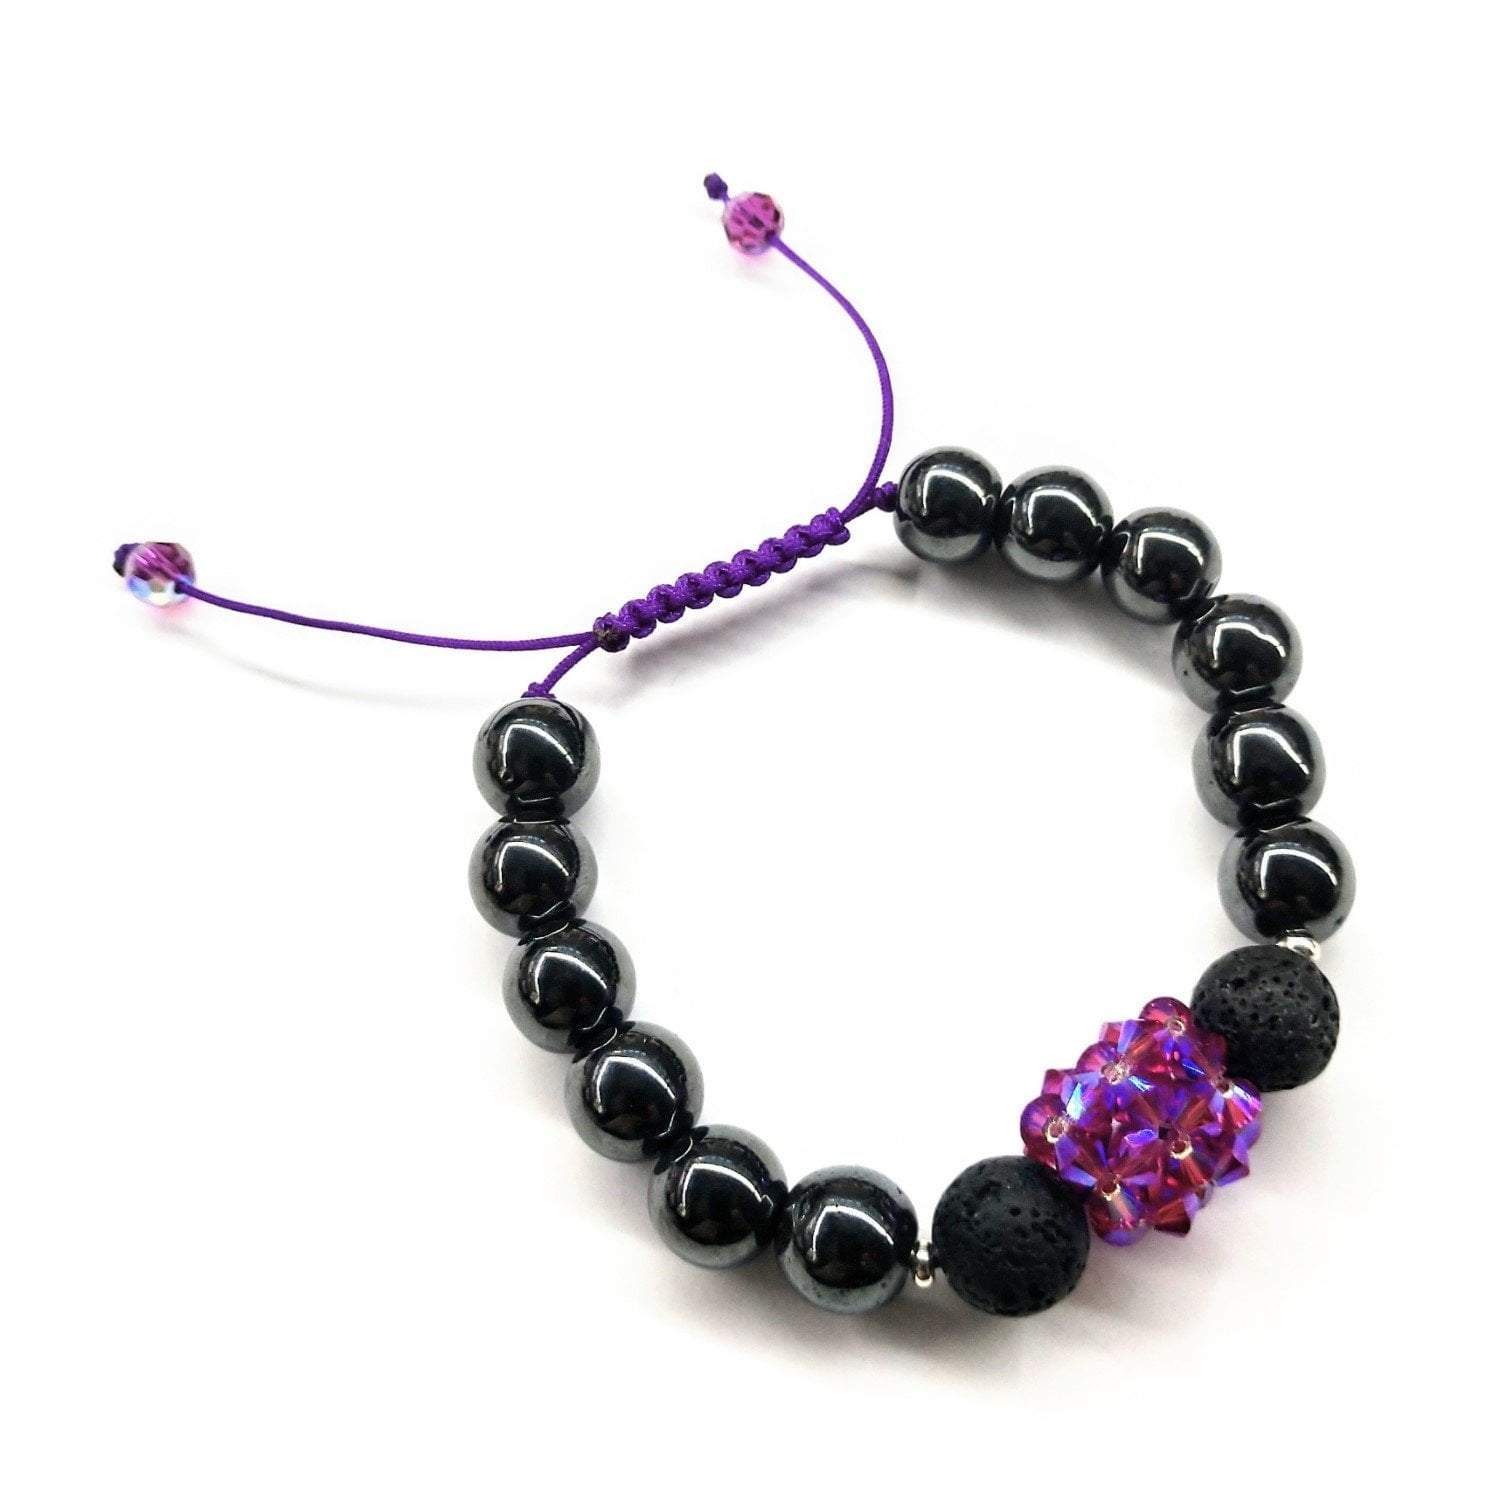 Glamorous Hematite and Fuchsia Crystal Lava Rock Bracelet - Adjustable Lengths, Sterling Silver Spacers, Maui Lava Beads Bijou Her